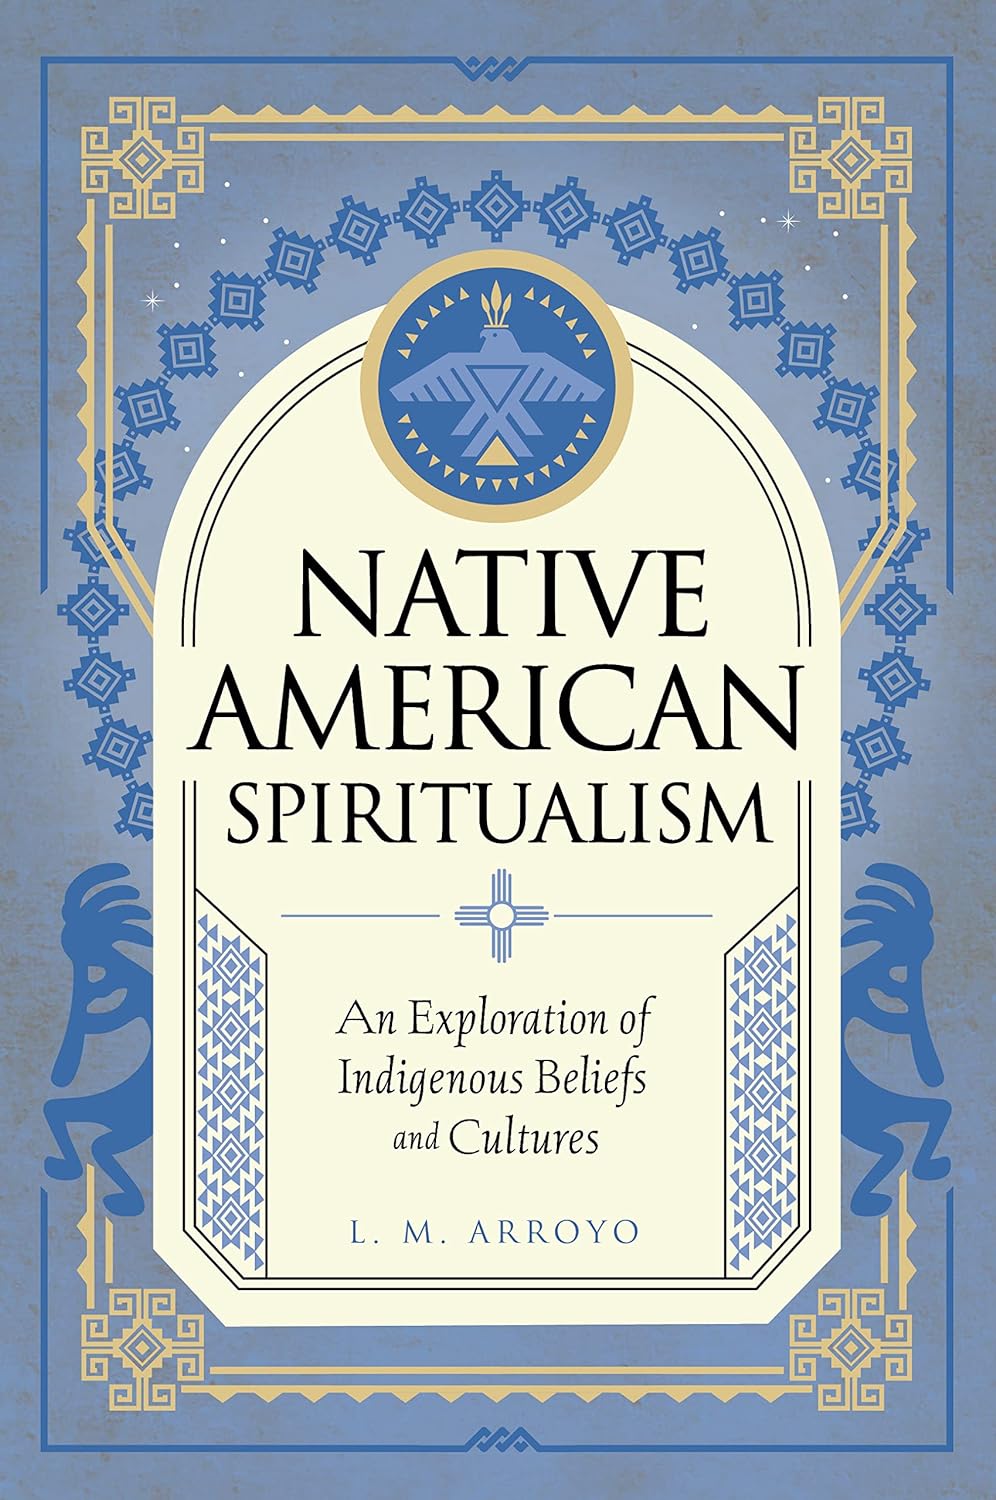 Native American Spiritualism by L.M Arroto